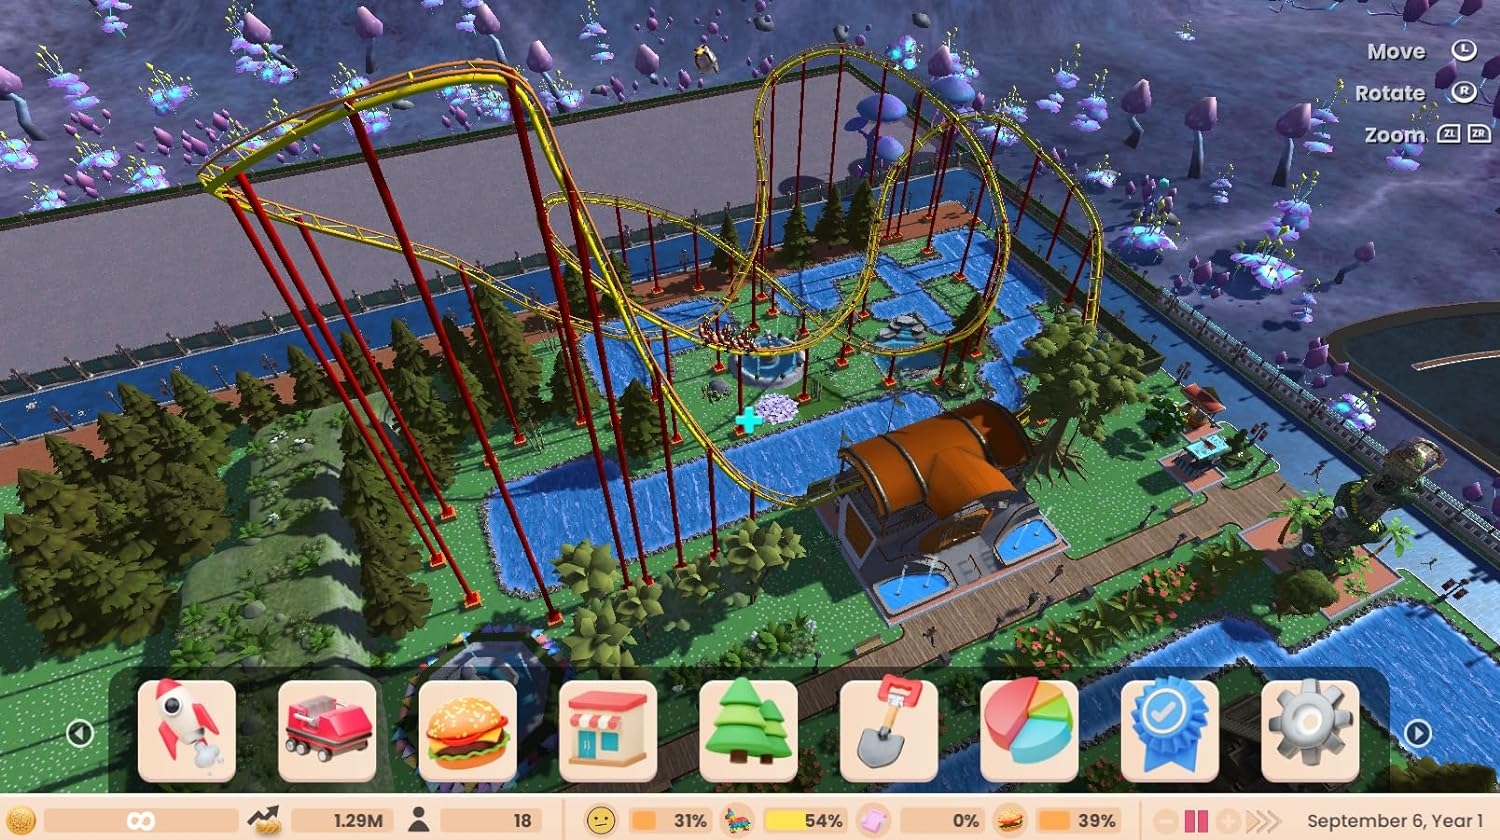 Rollercoaster Tycoon 2 - The Sandbox Games DB